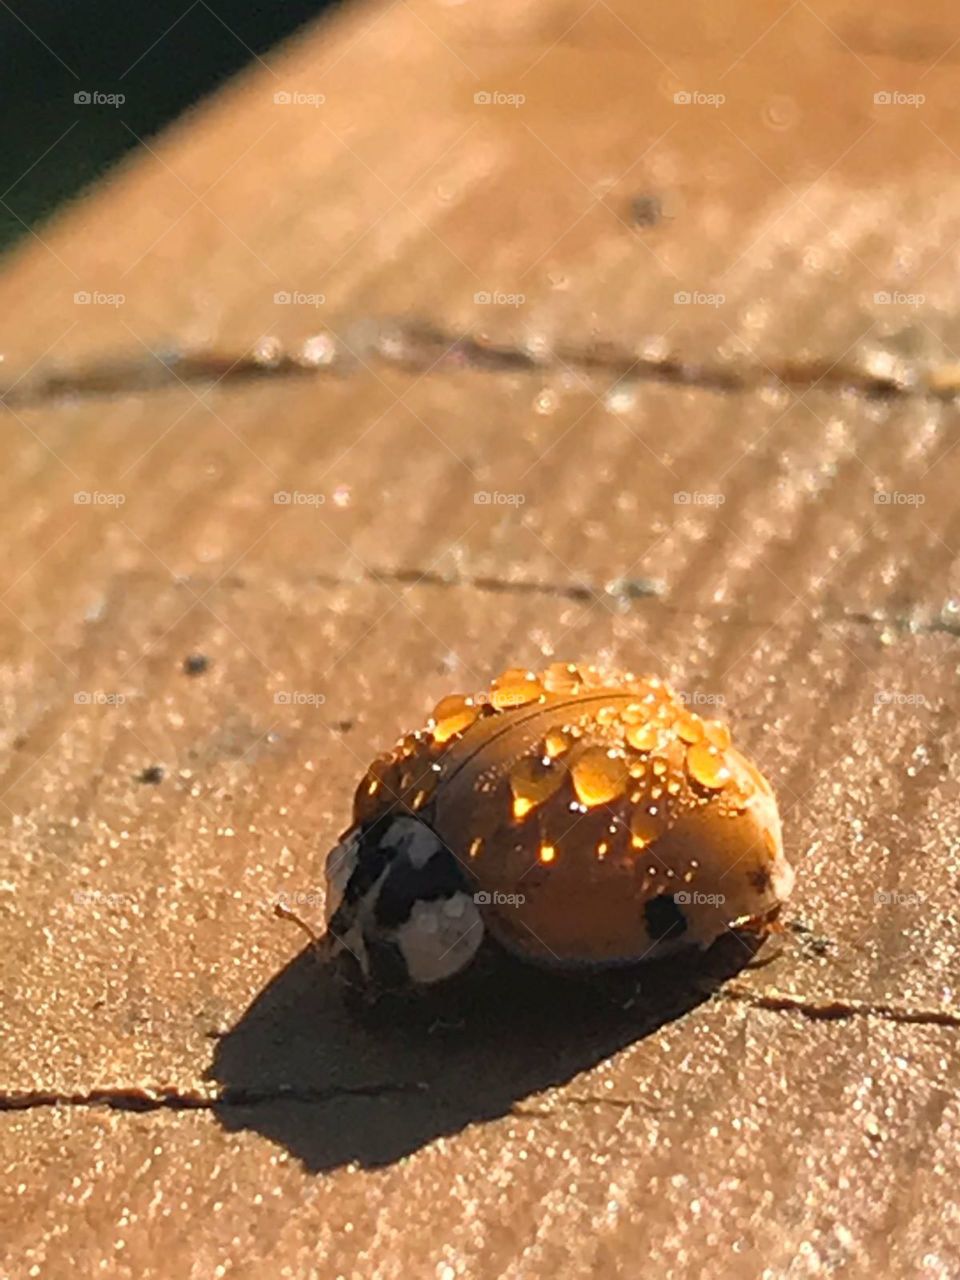 #bug #ladybug #insect #insects #photo